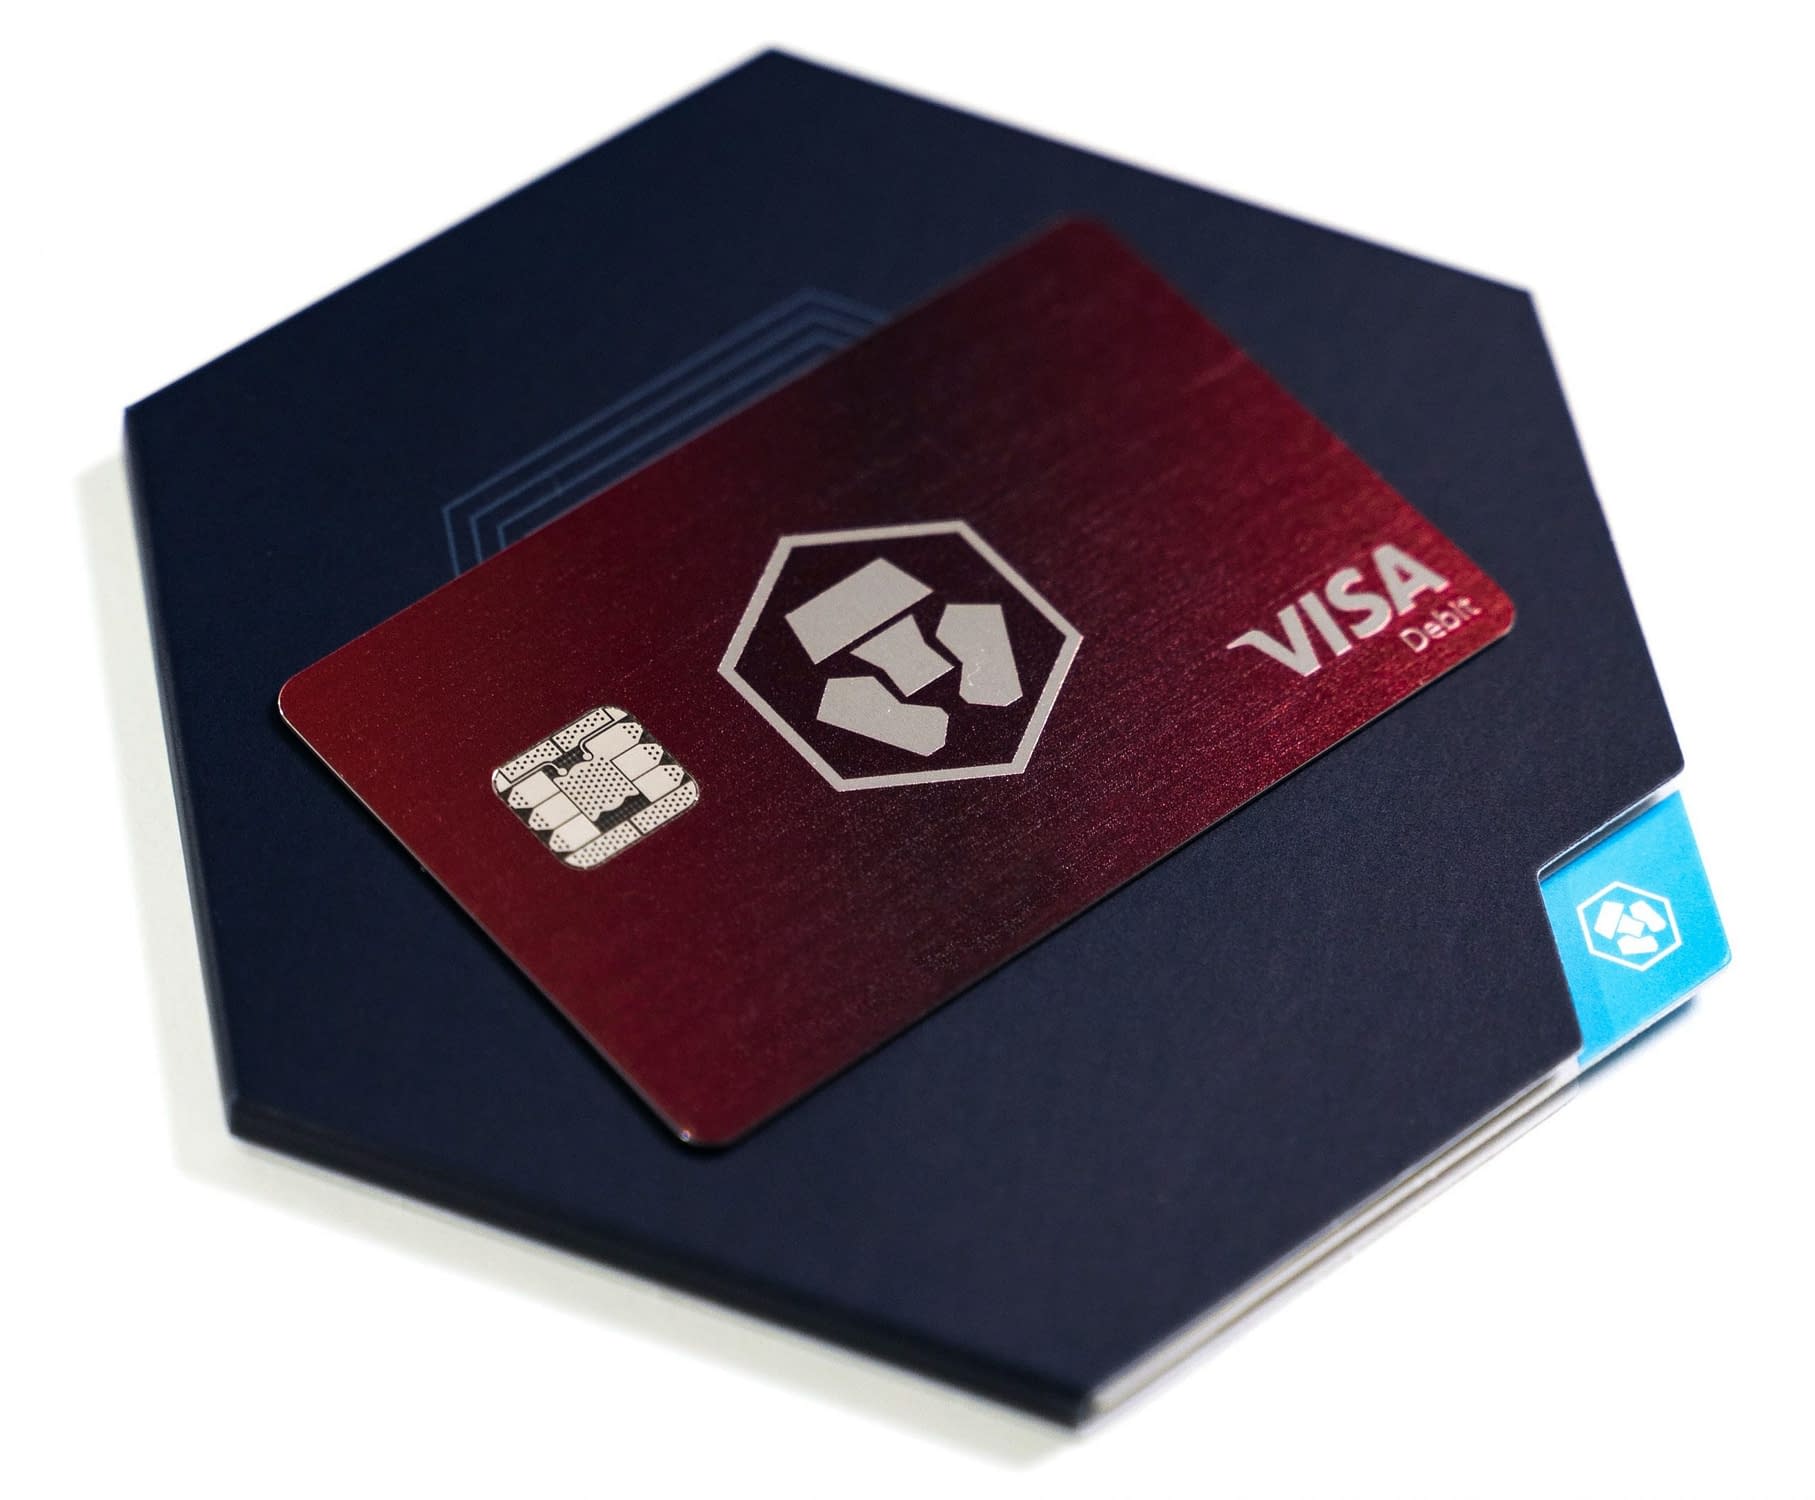 Crypto.com Visa Ryby Steel Card